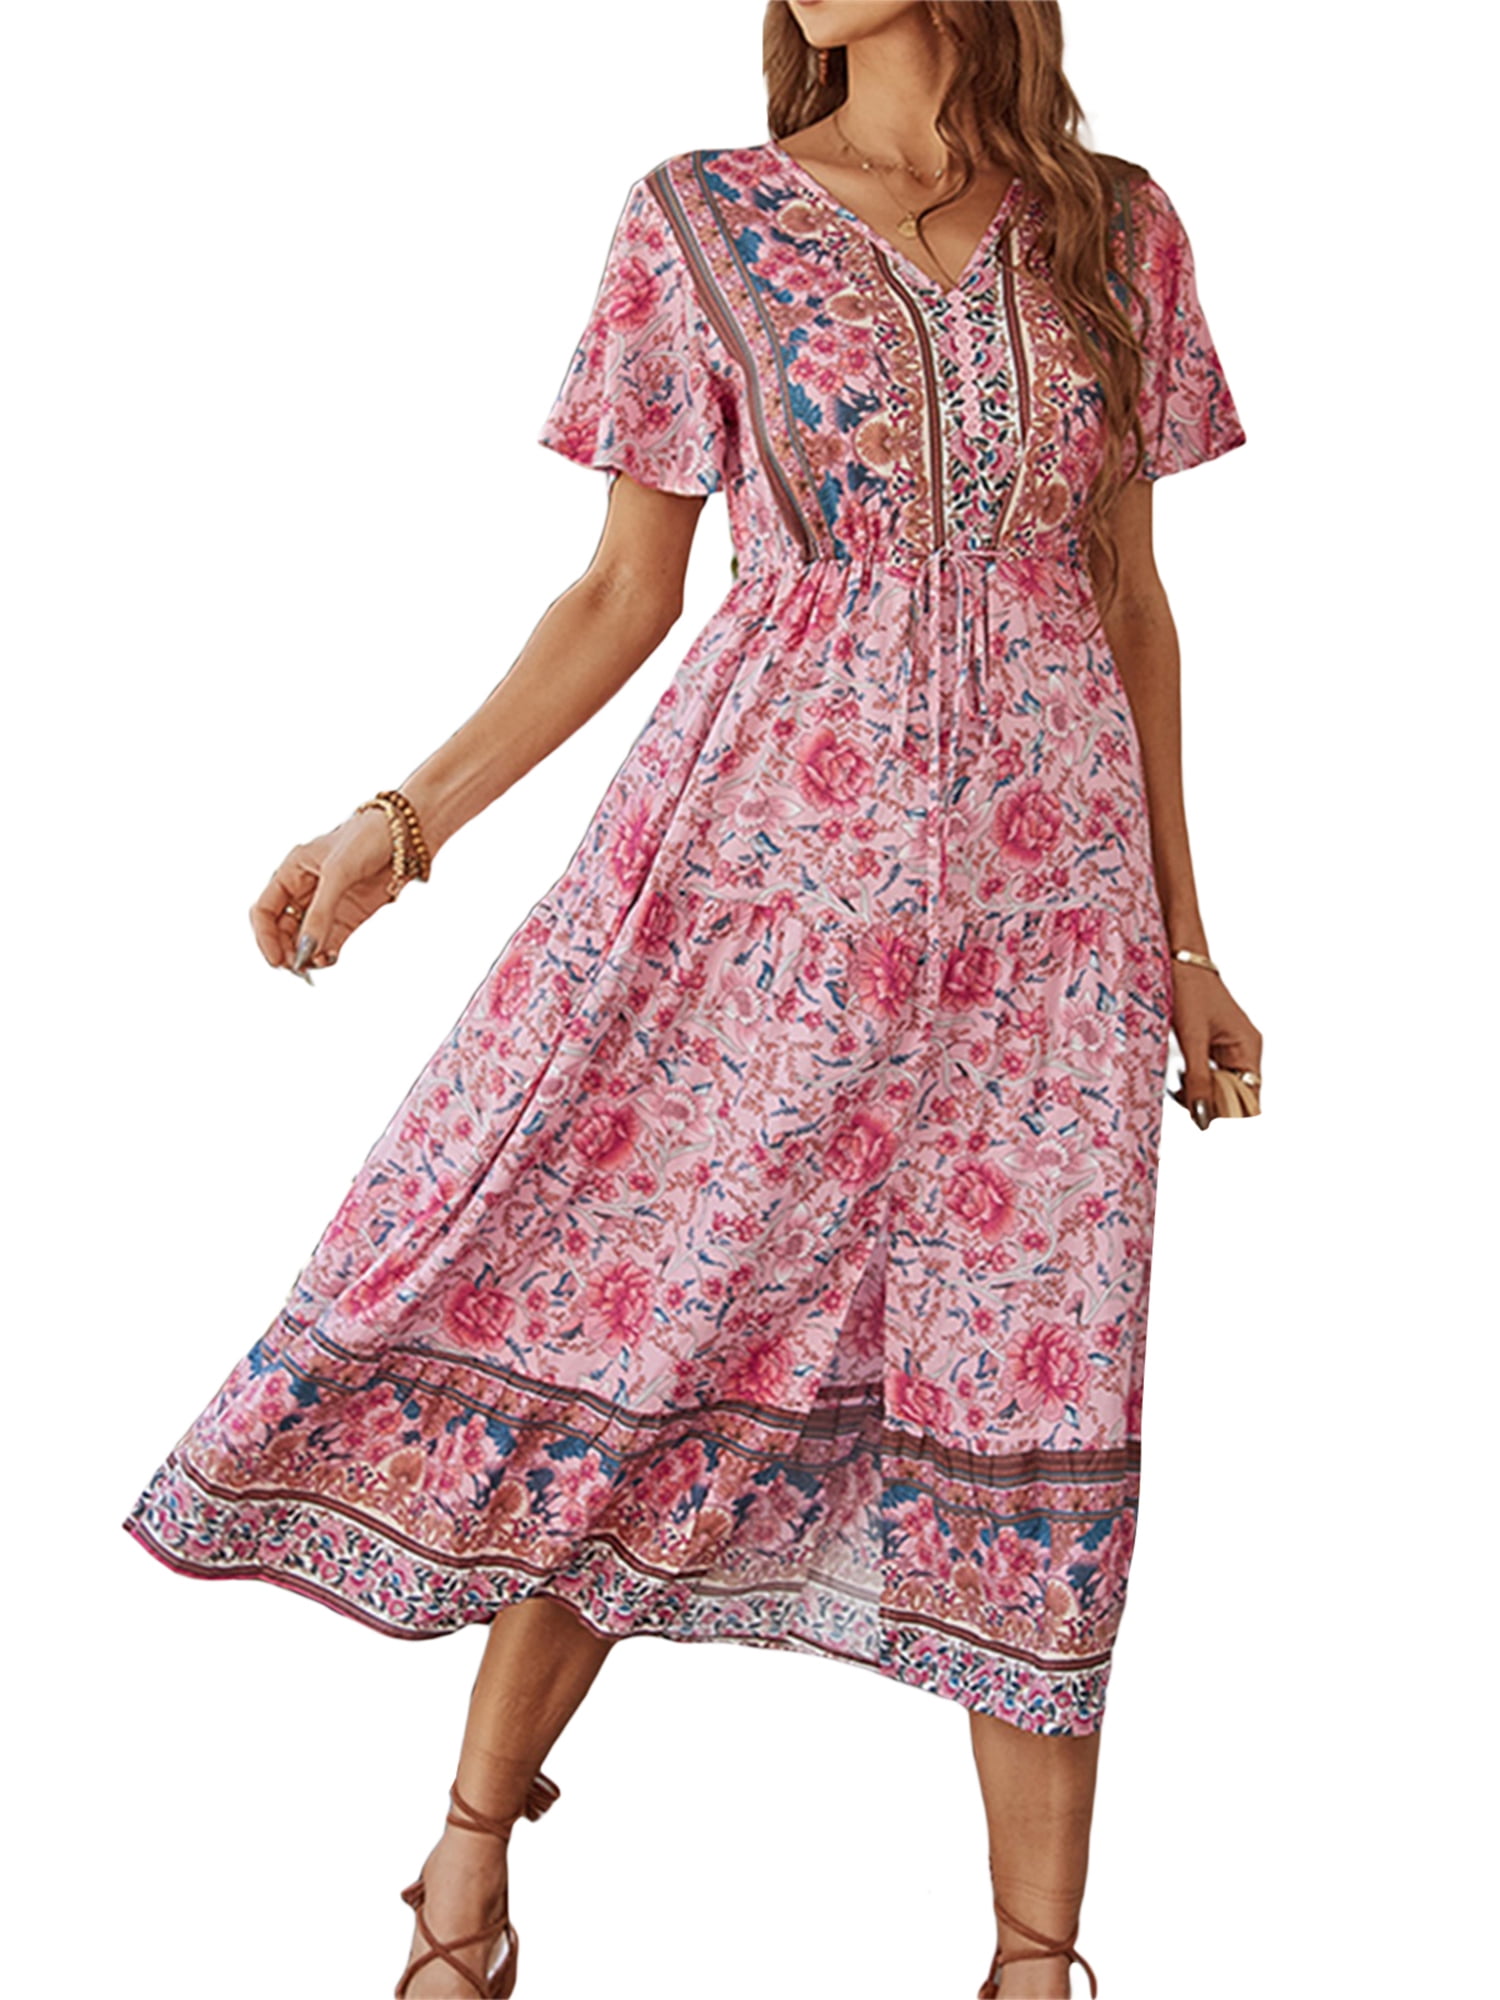 Kayotuas Women's Summer Boho Dress Floral Print Vintage Short Sleeve ...